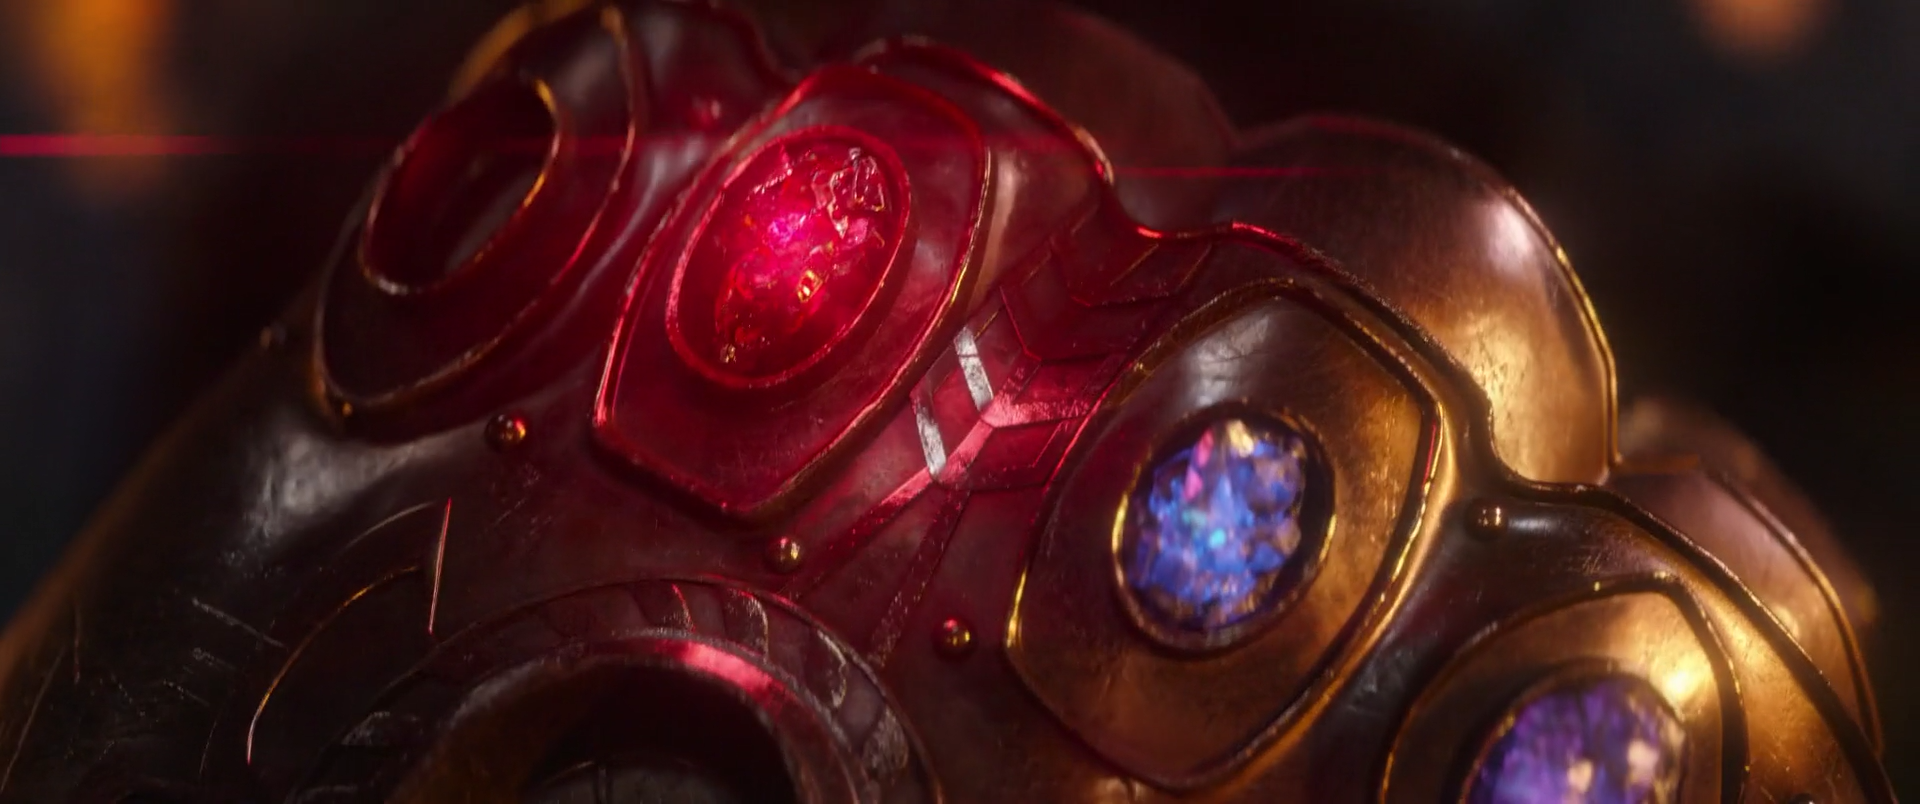 Space stone. Танос камни бесконечности. Мстители камни бесконечности. Thanos камни бесконечности. Танос с камнем реальности.